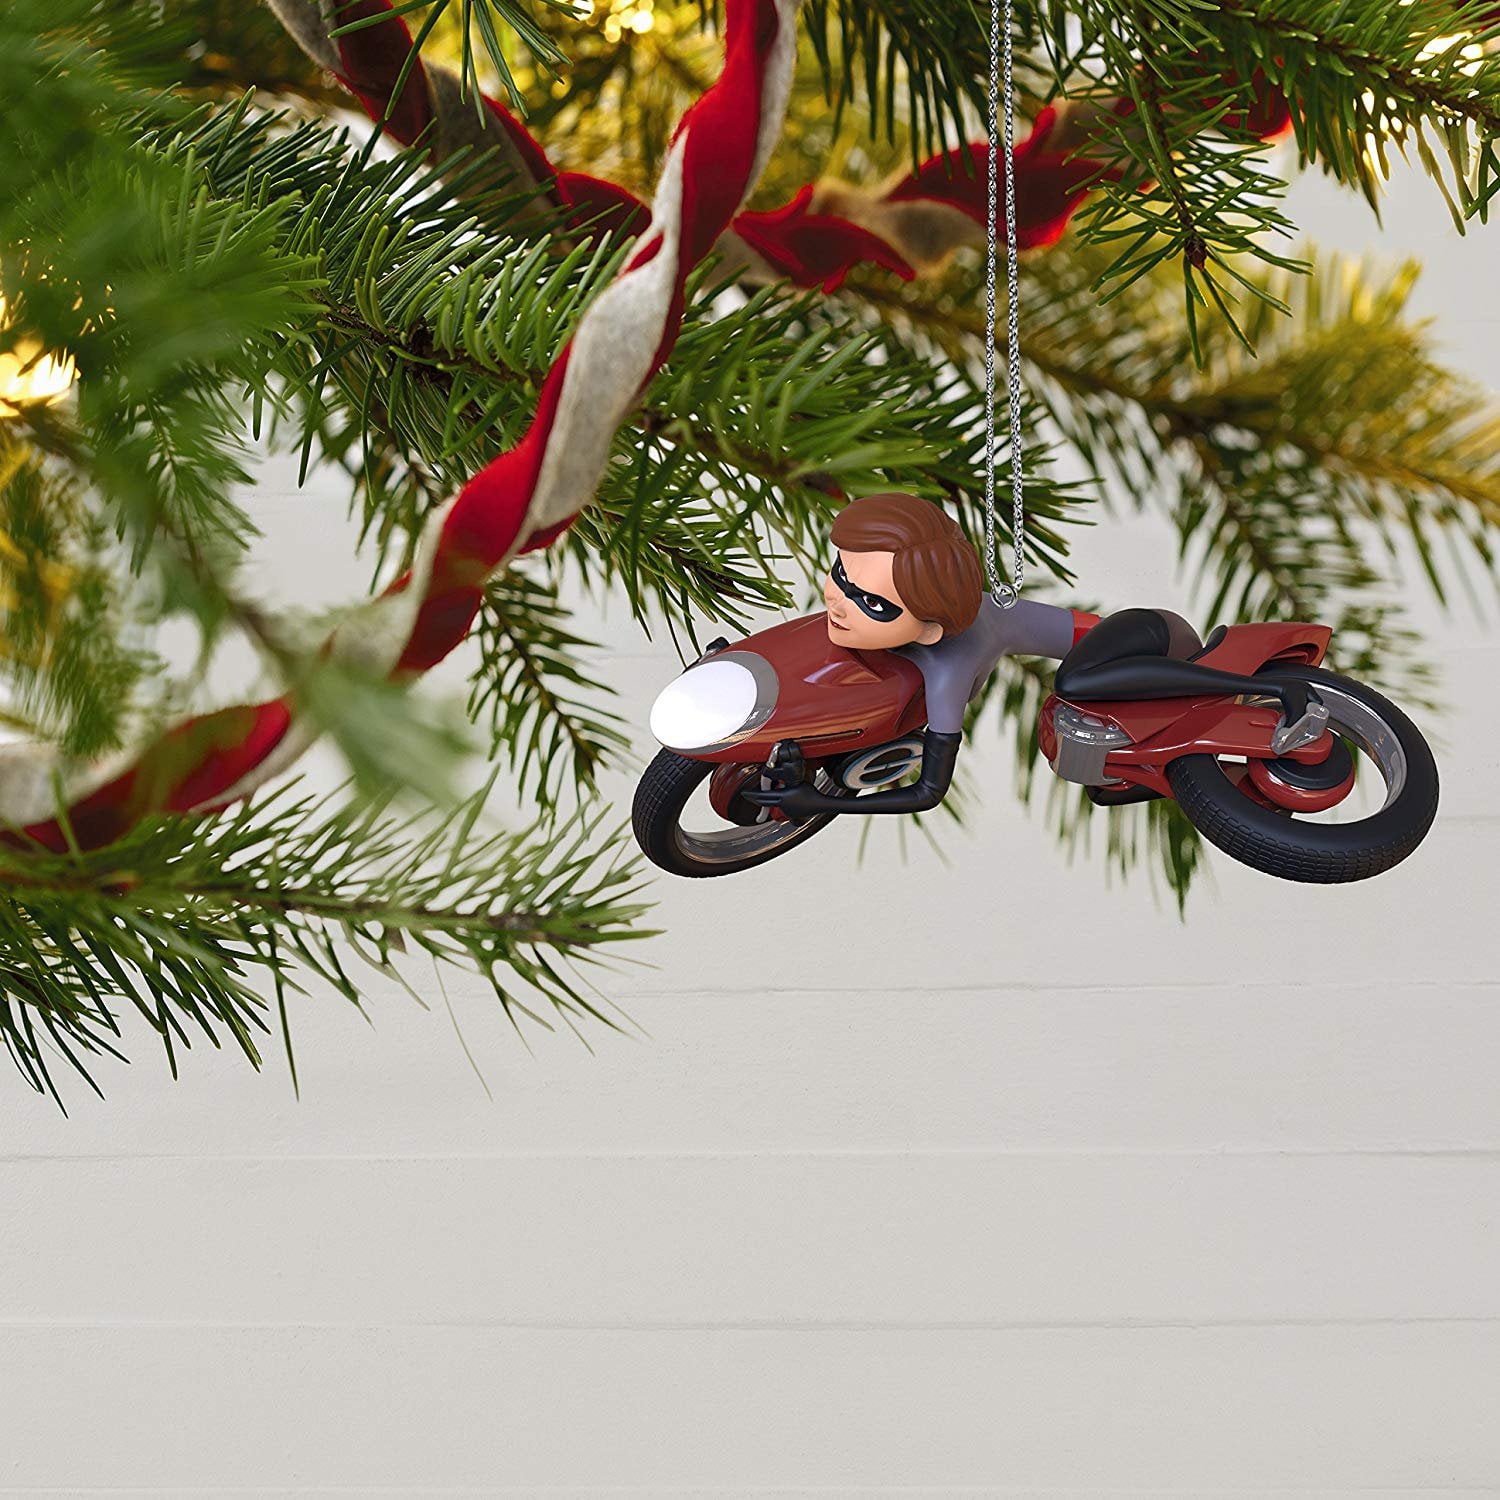 Incredibles 2 Elastigirl Disney Pixar Rides Again FIgurine Hallmark Keepsake Christmas Ornament 2018 Year Dated 